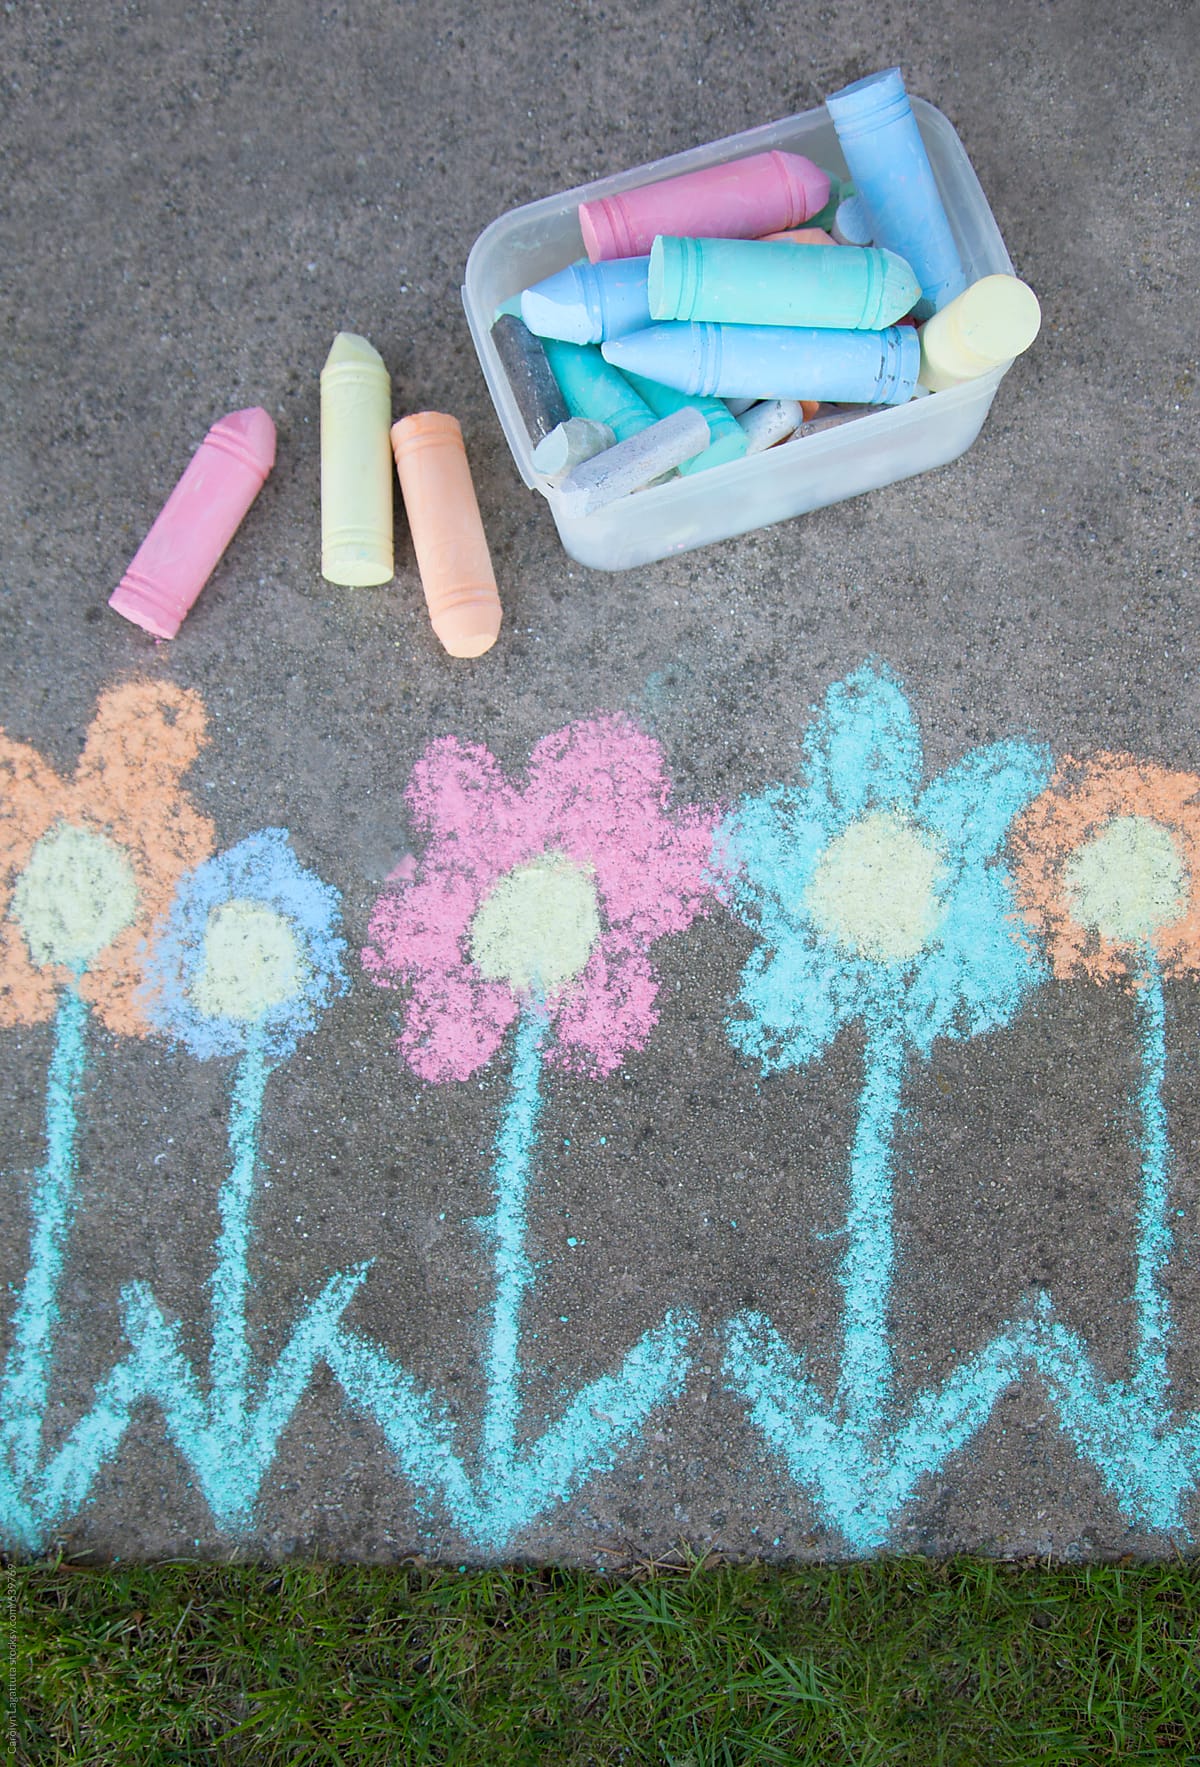 Chalk flowers drawn on pavement next to green grass